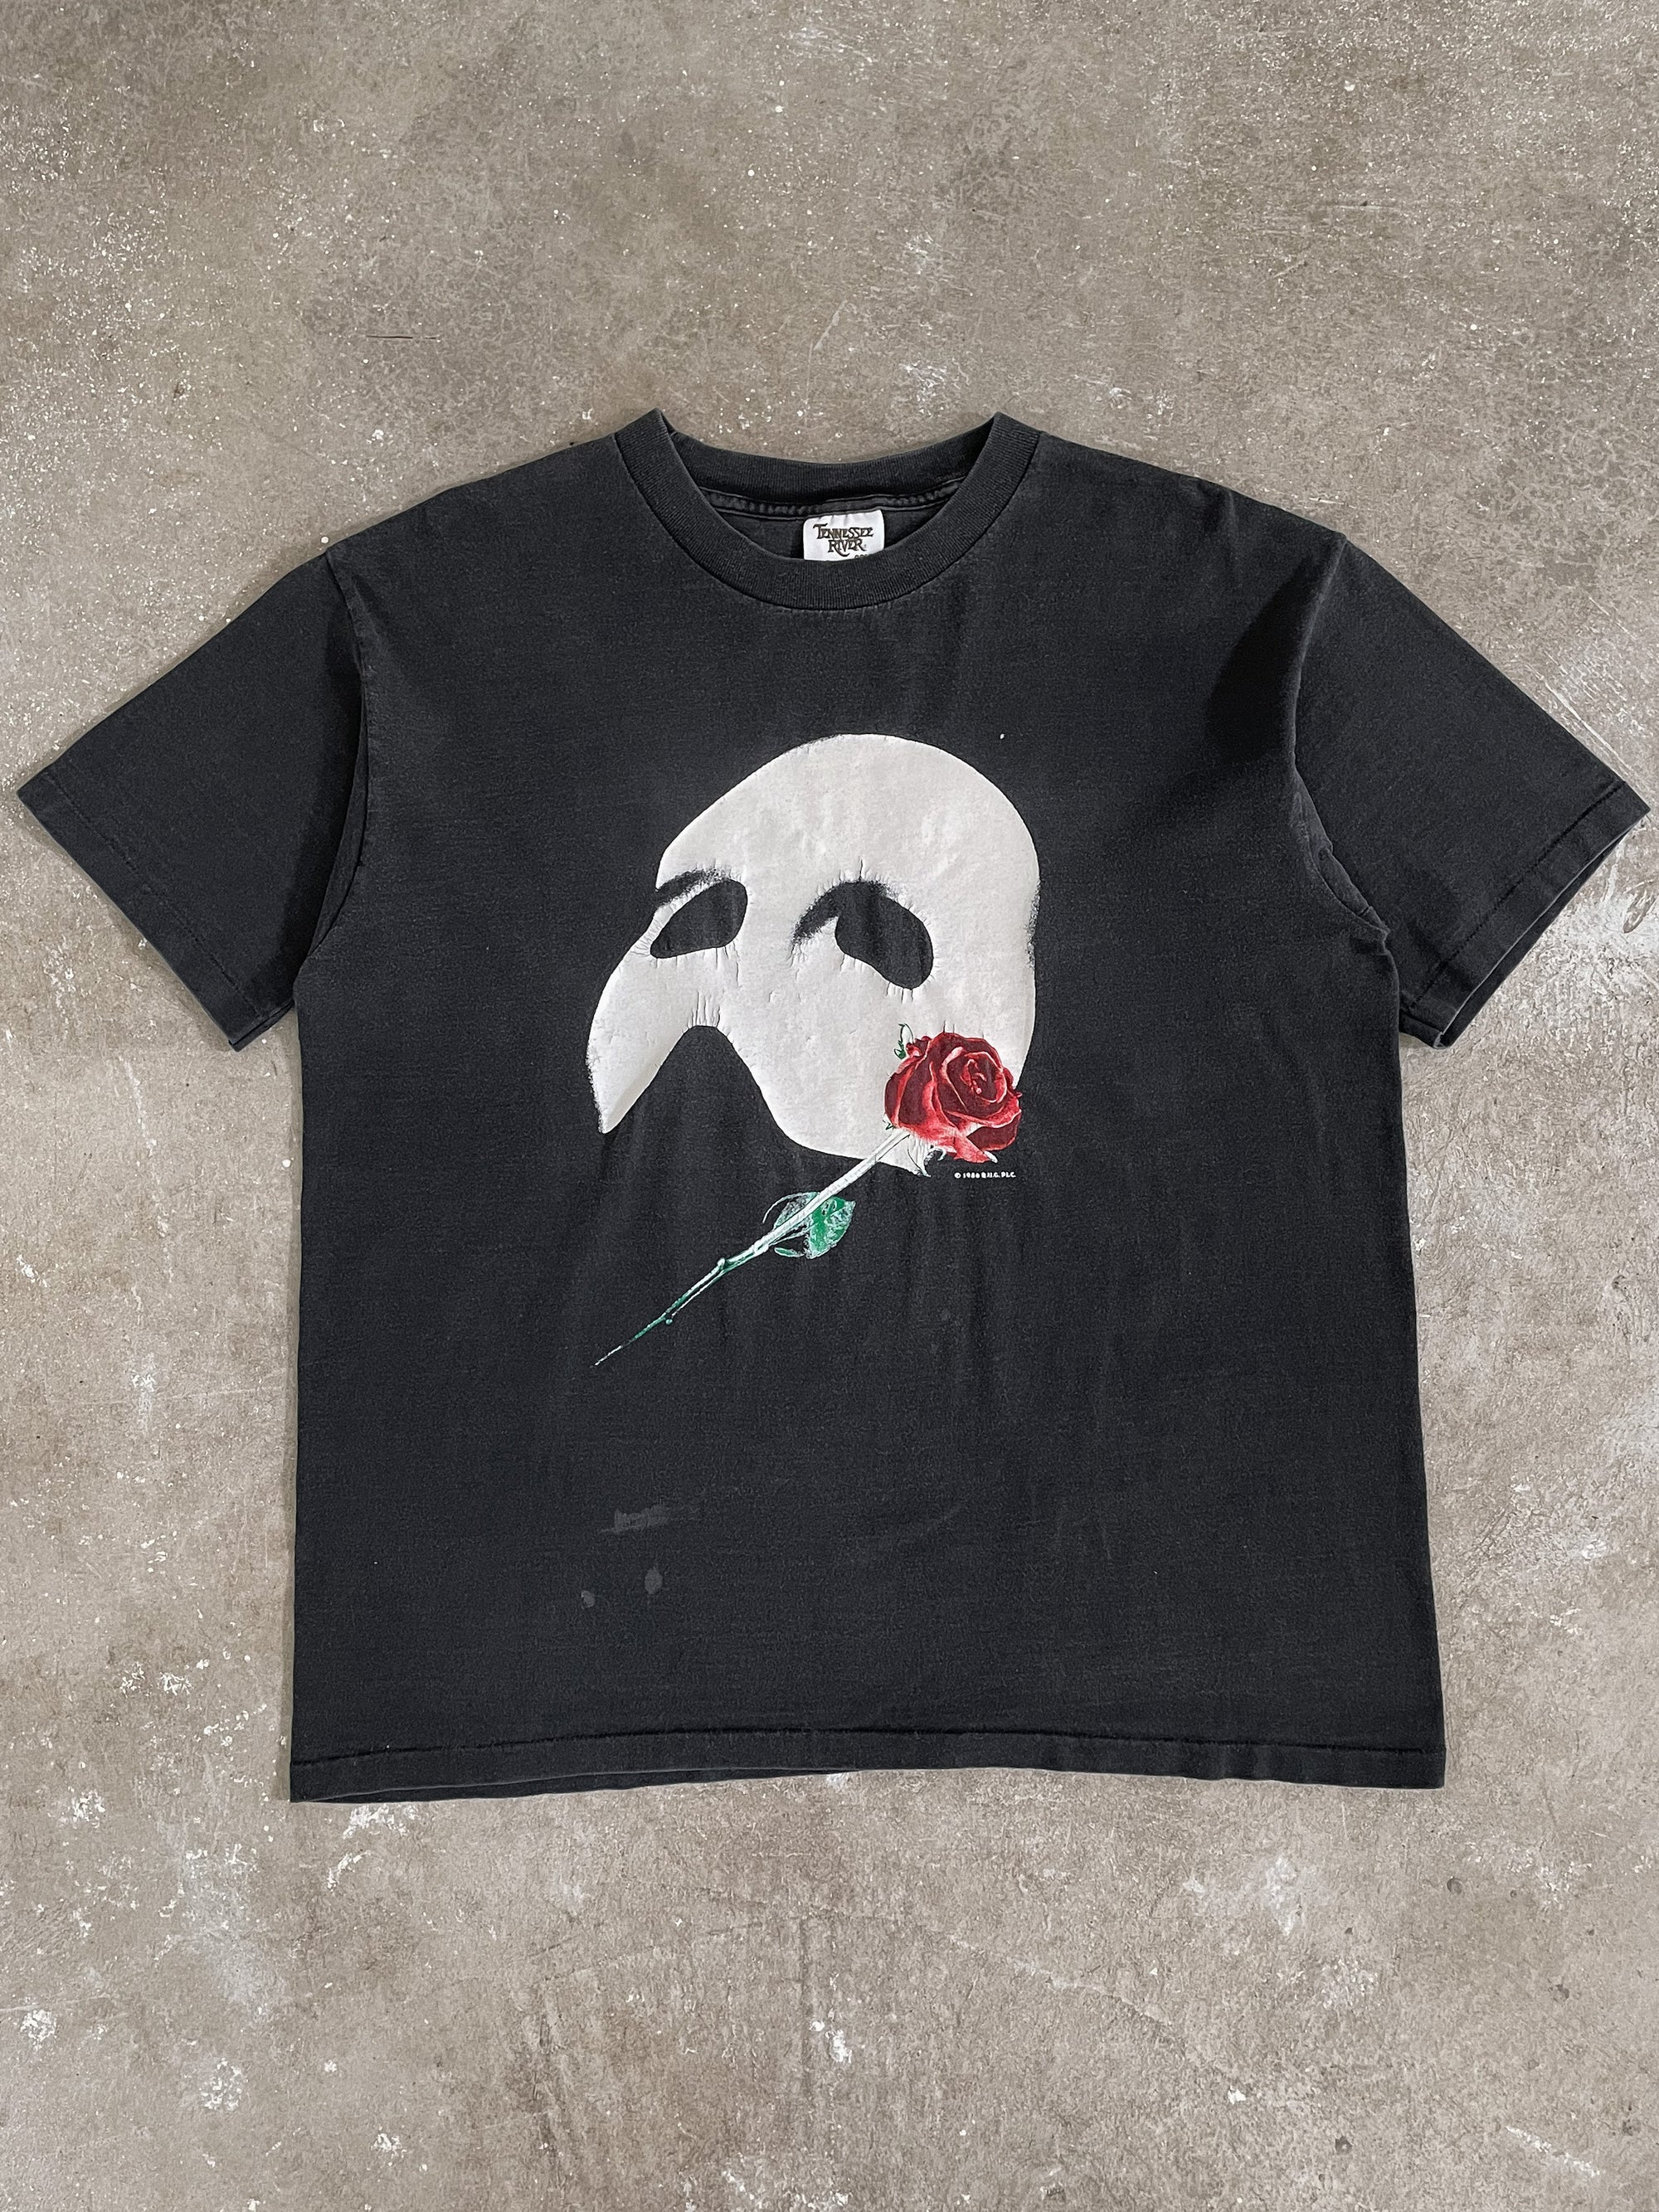 1990s “Phantom Of The Opera” Single Stitched Tee (L)